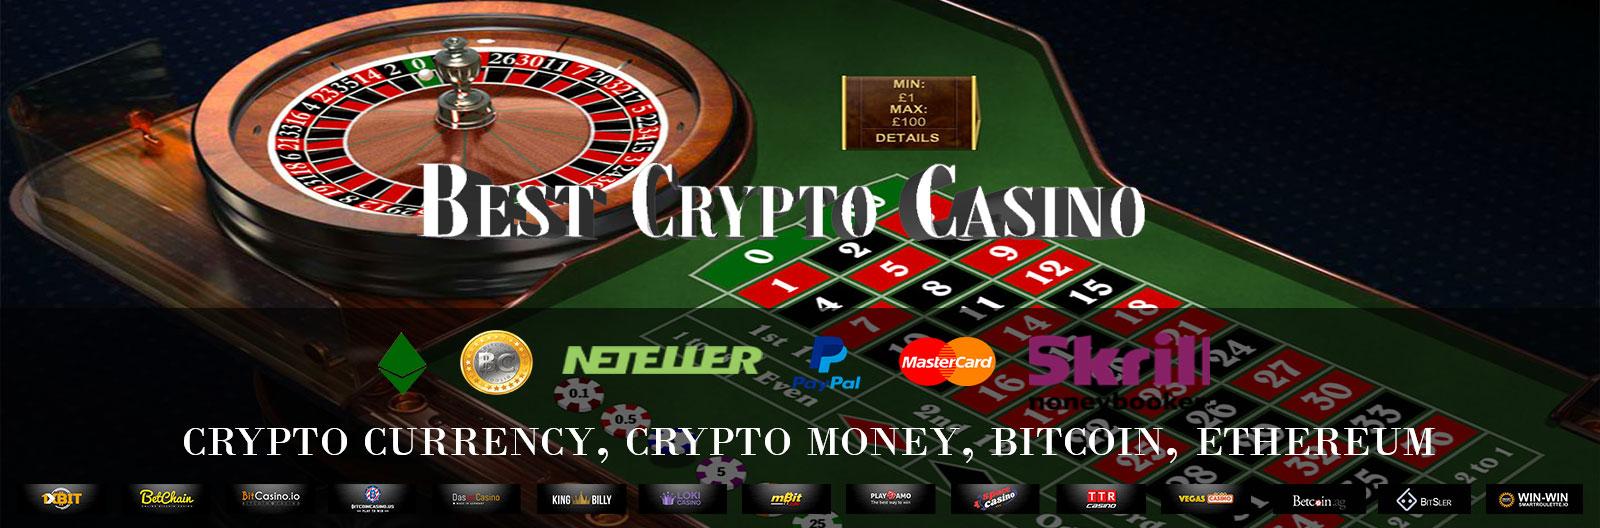 Bitcoin casino no deposit codes